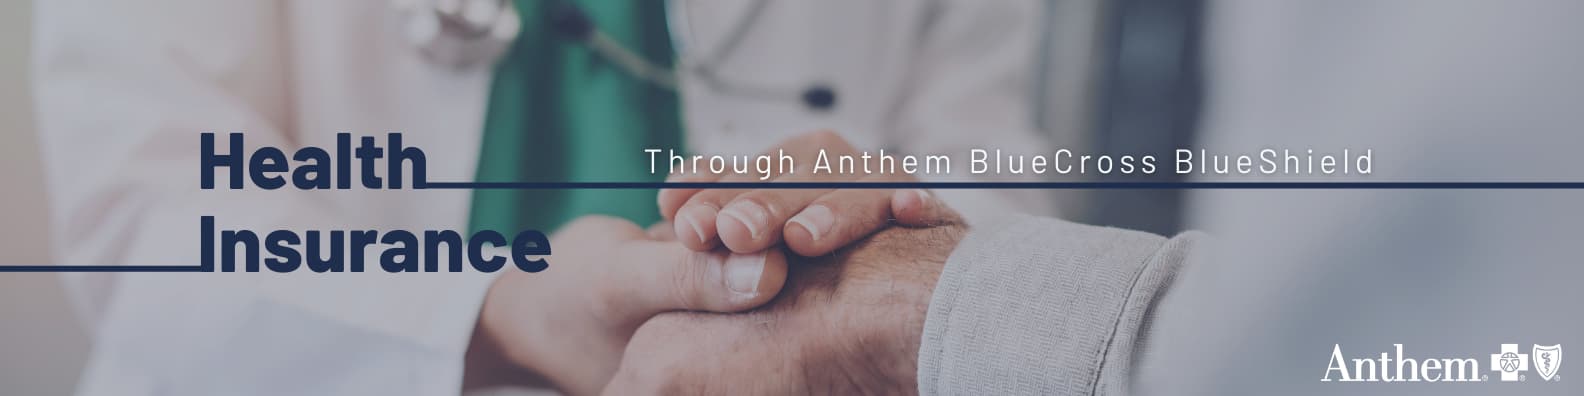 Health Insurance - Anthem banner